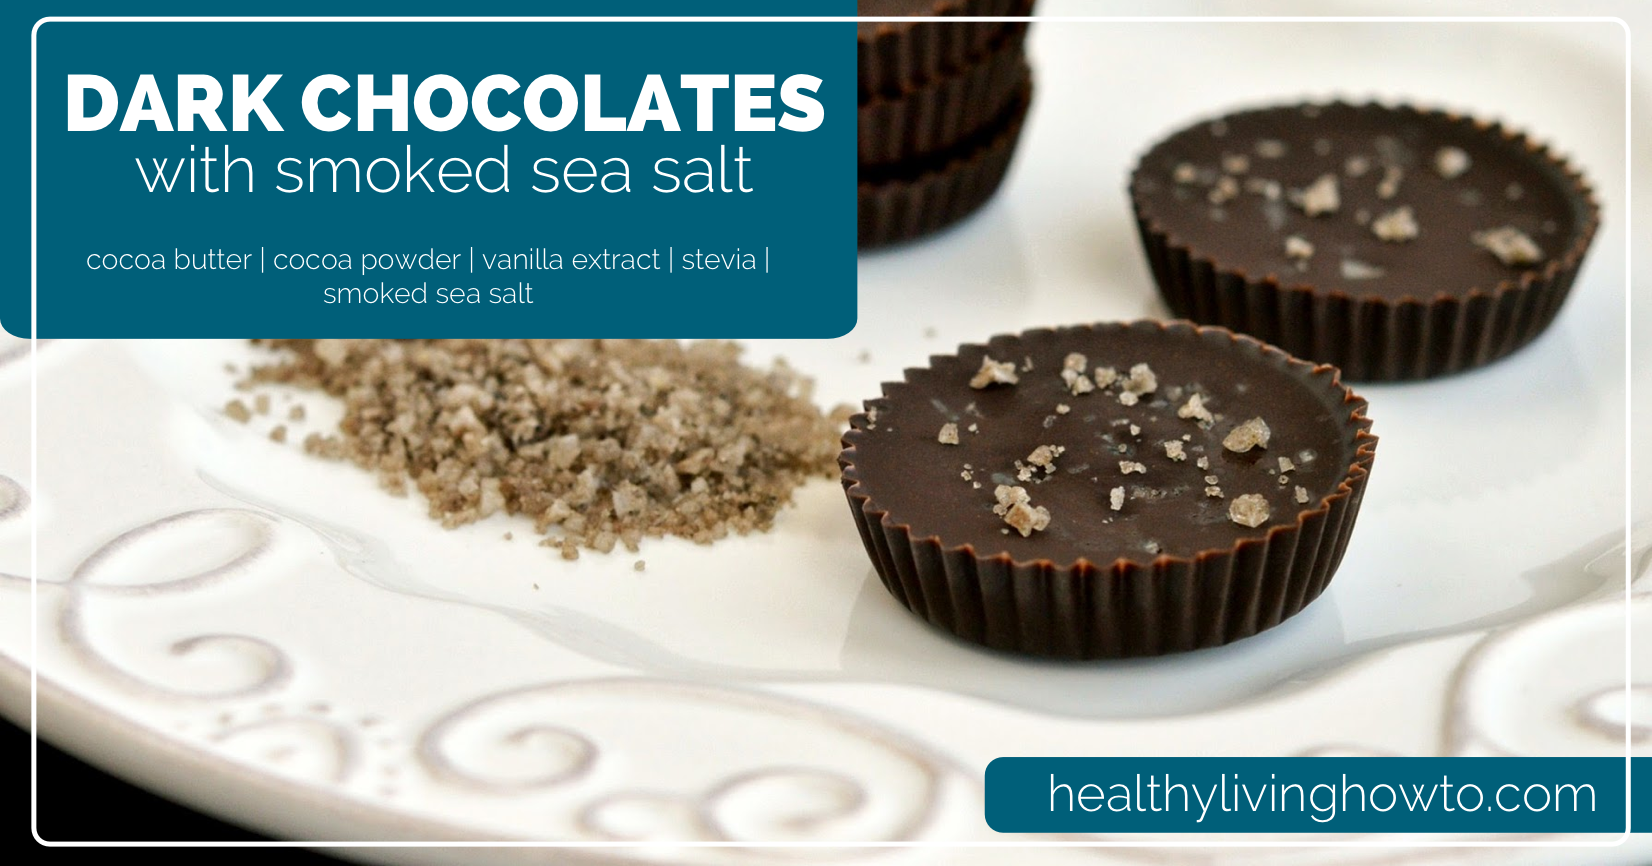 Dark Chocolate With Smoked Sea Salt | healthylivinghowto.com